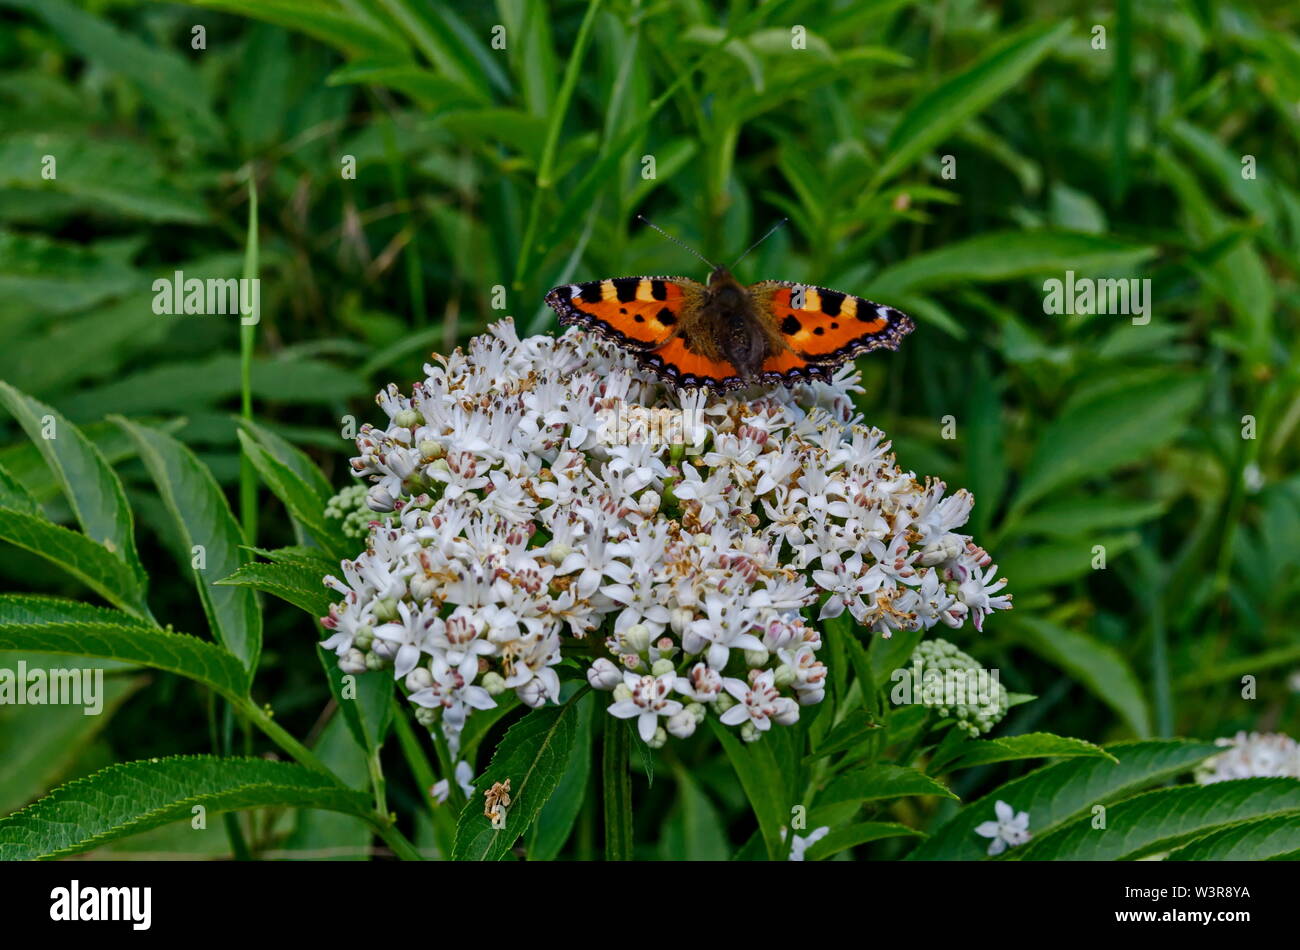 Monarch or Danaus plexippus butterfly over blossom of Elderberry or Sambucus ebulus, poisonous bush, Jeleznitsa, Vitosha mountain, Bulgaria Stock Photo